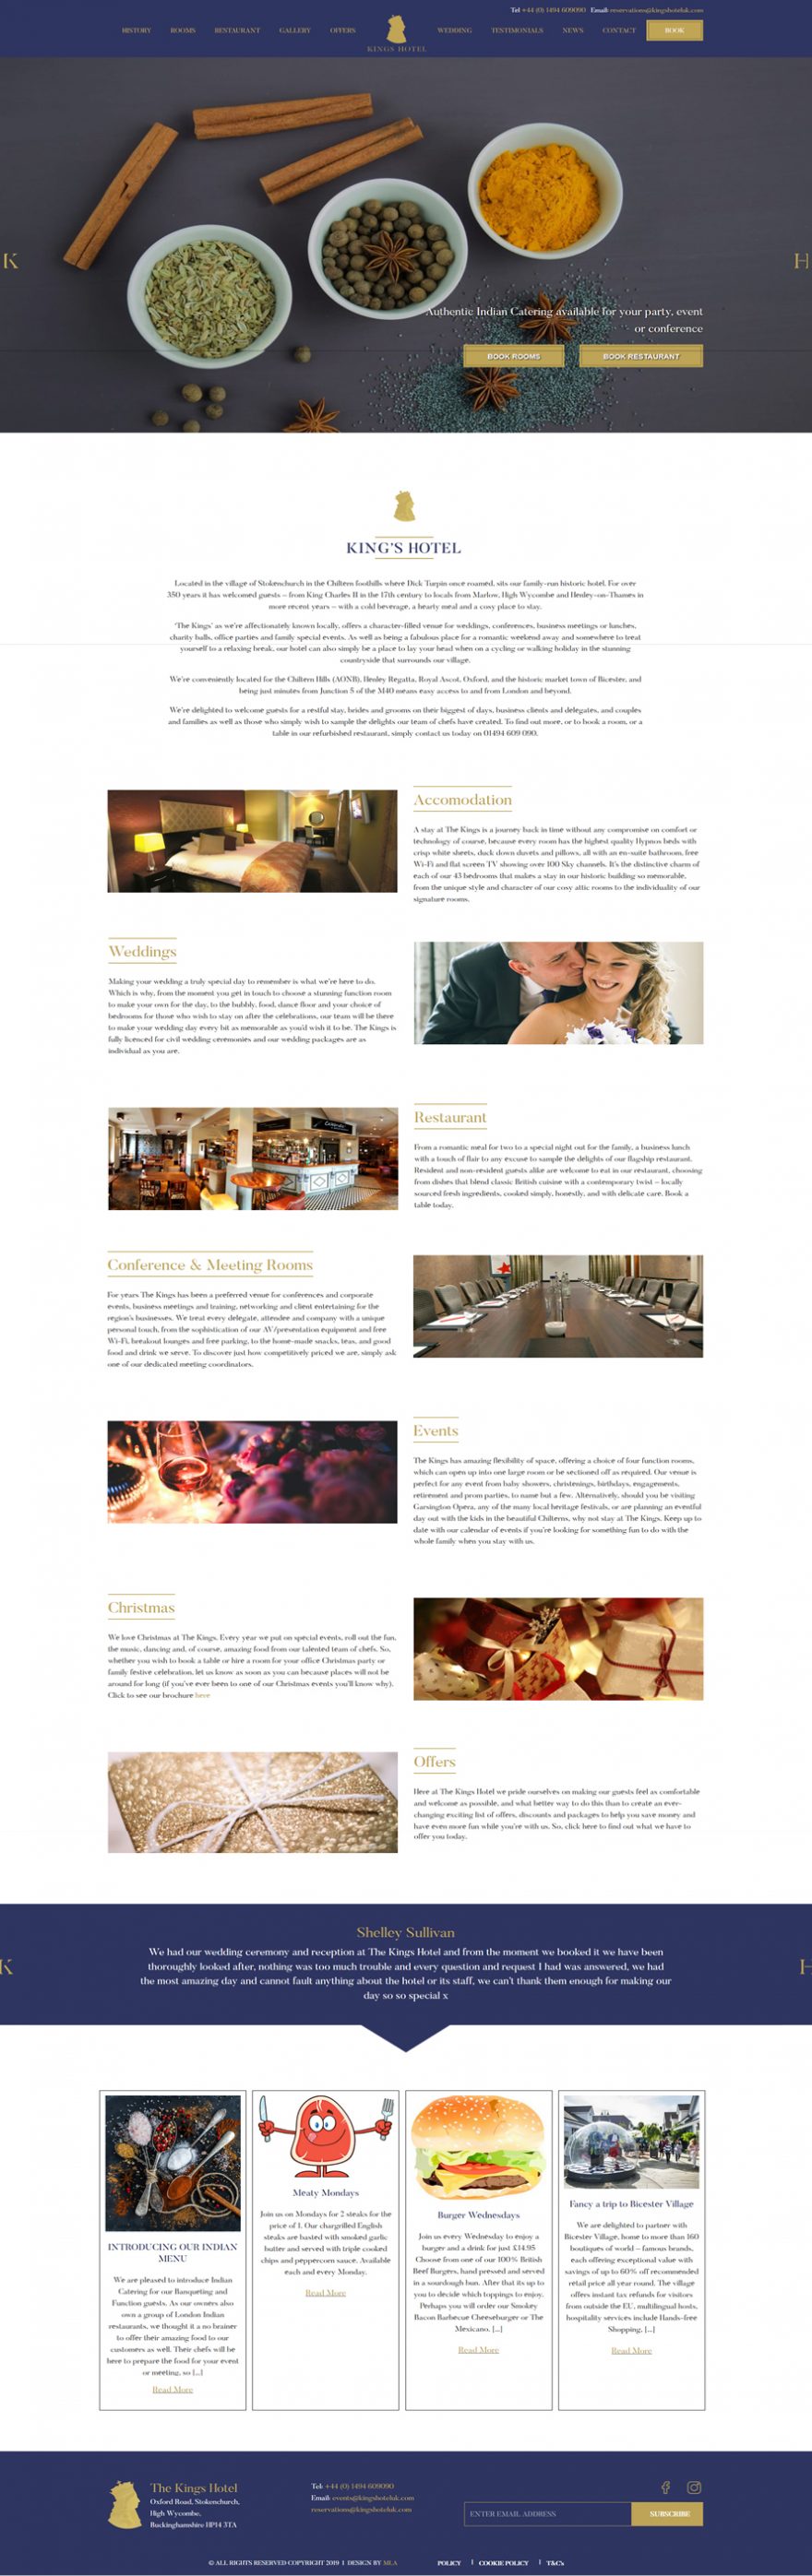 kings hotel homepage - Web design London - web design agency london